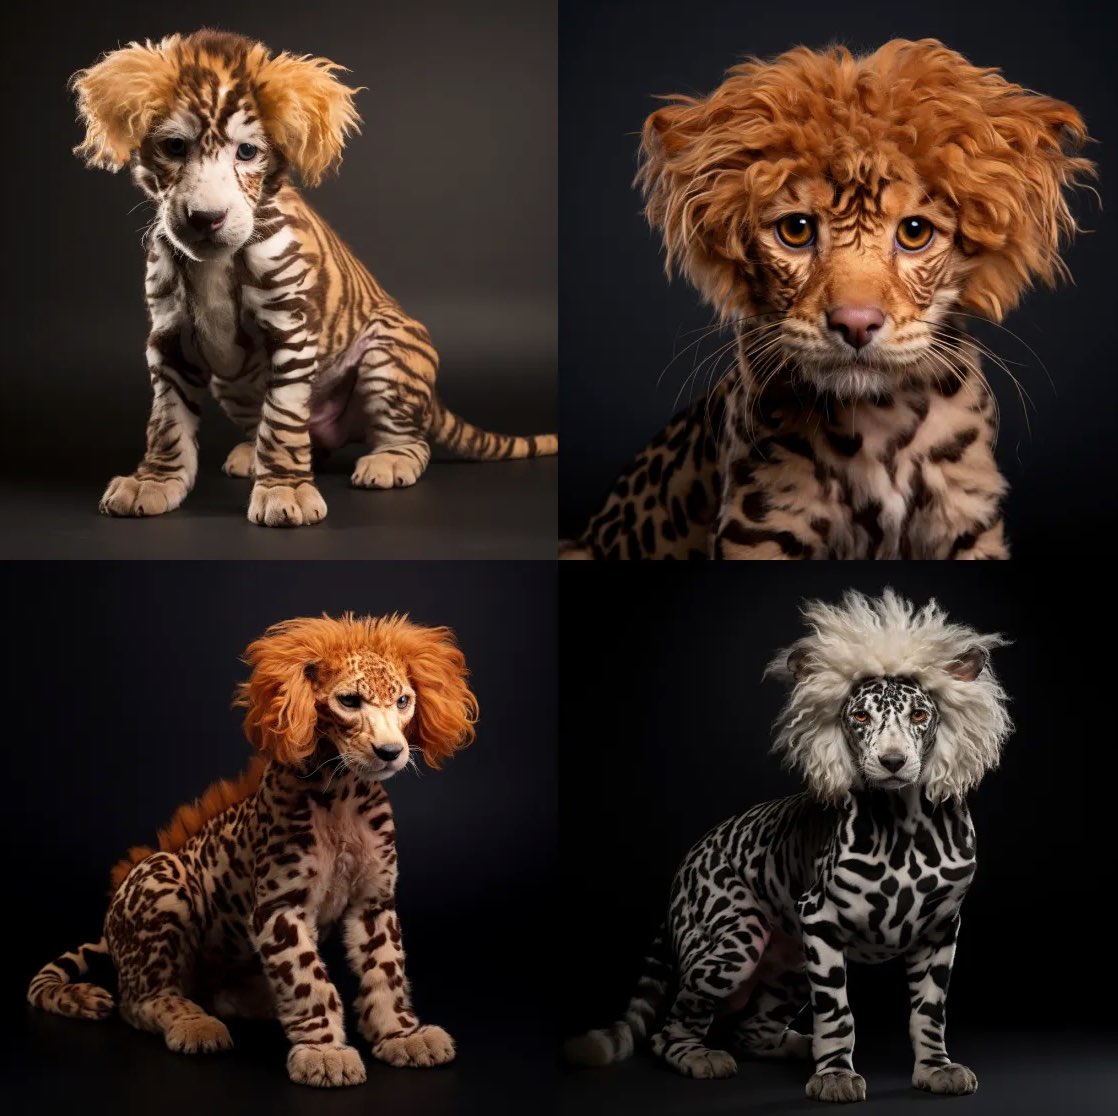 studio photography, hybrid creature poodle-tiger. Mischwesen